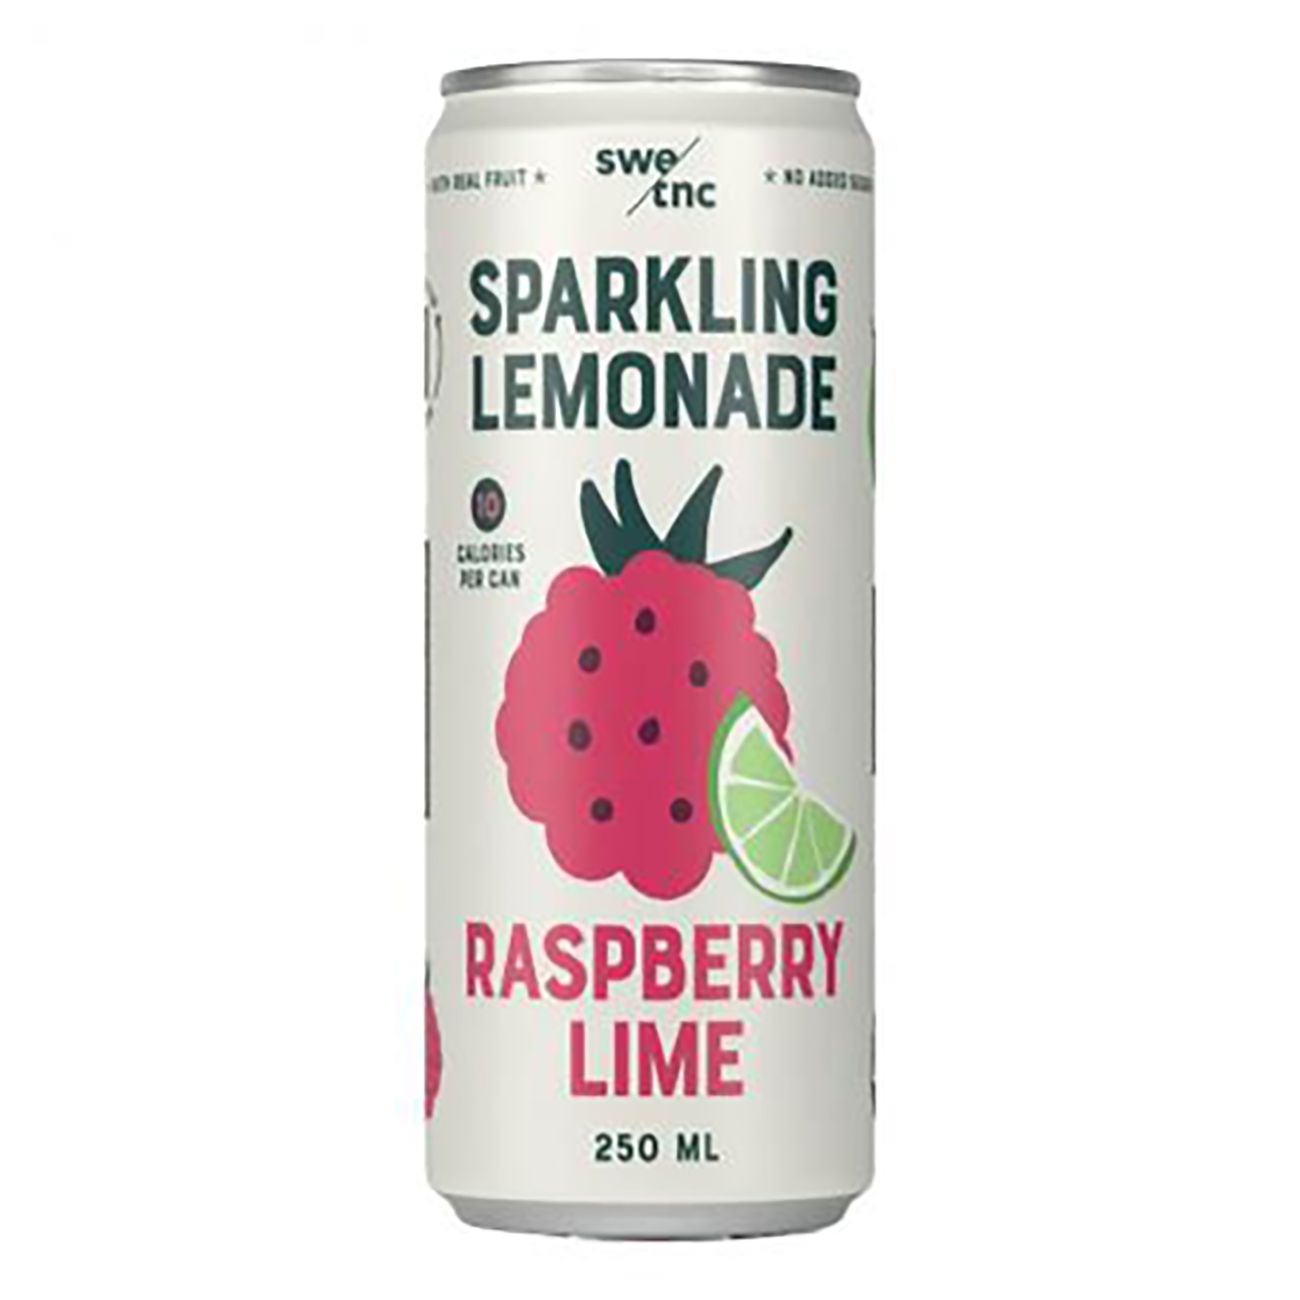 swedish-tonic-sparkling-lemonade-raspberry-lime-95377-1